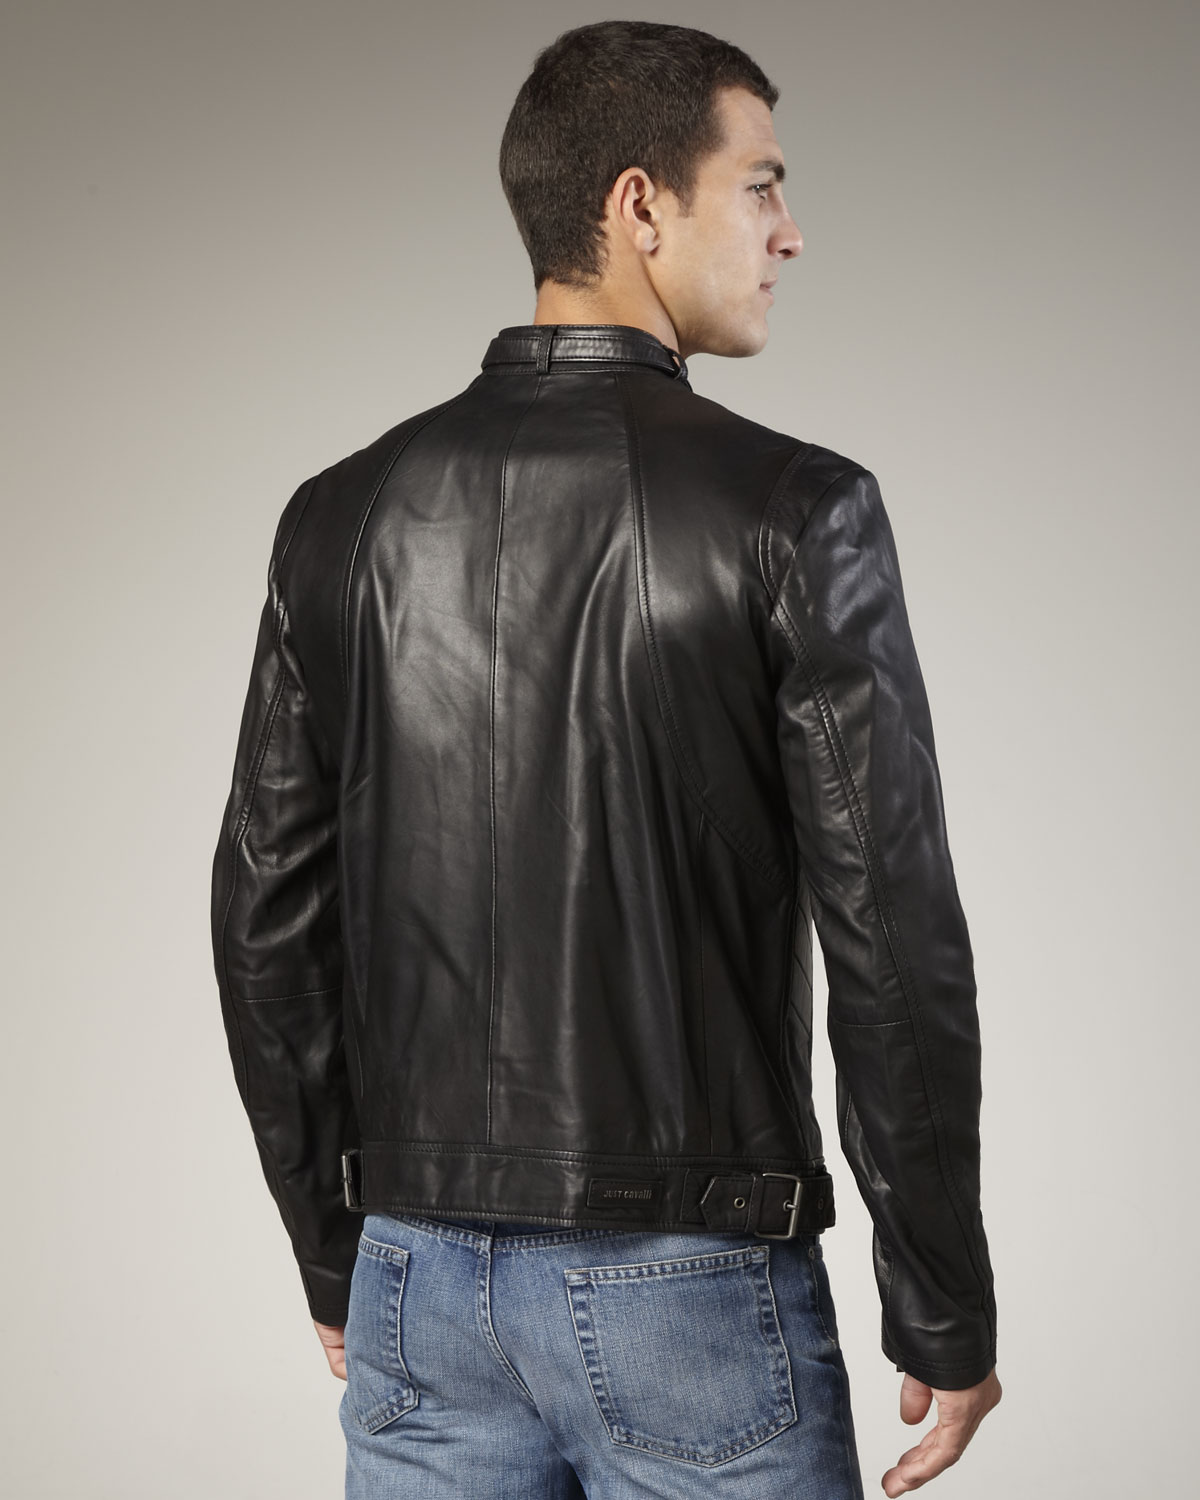 Lyst - Just Cavalli Leather Biker Jacket in Black for Men